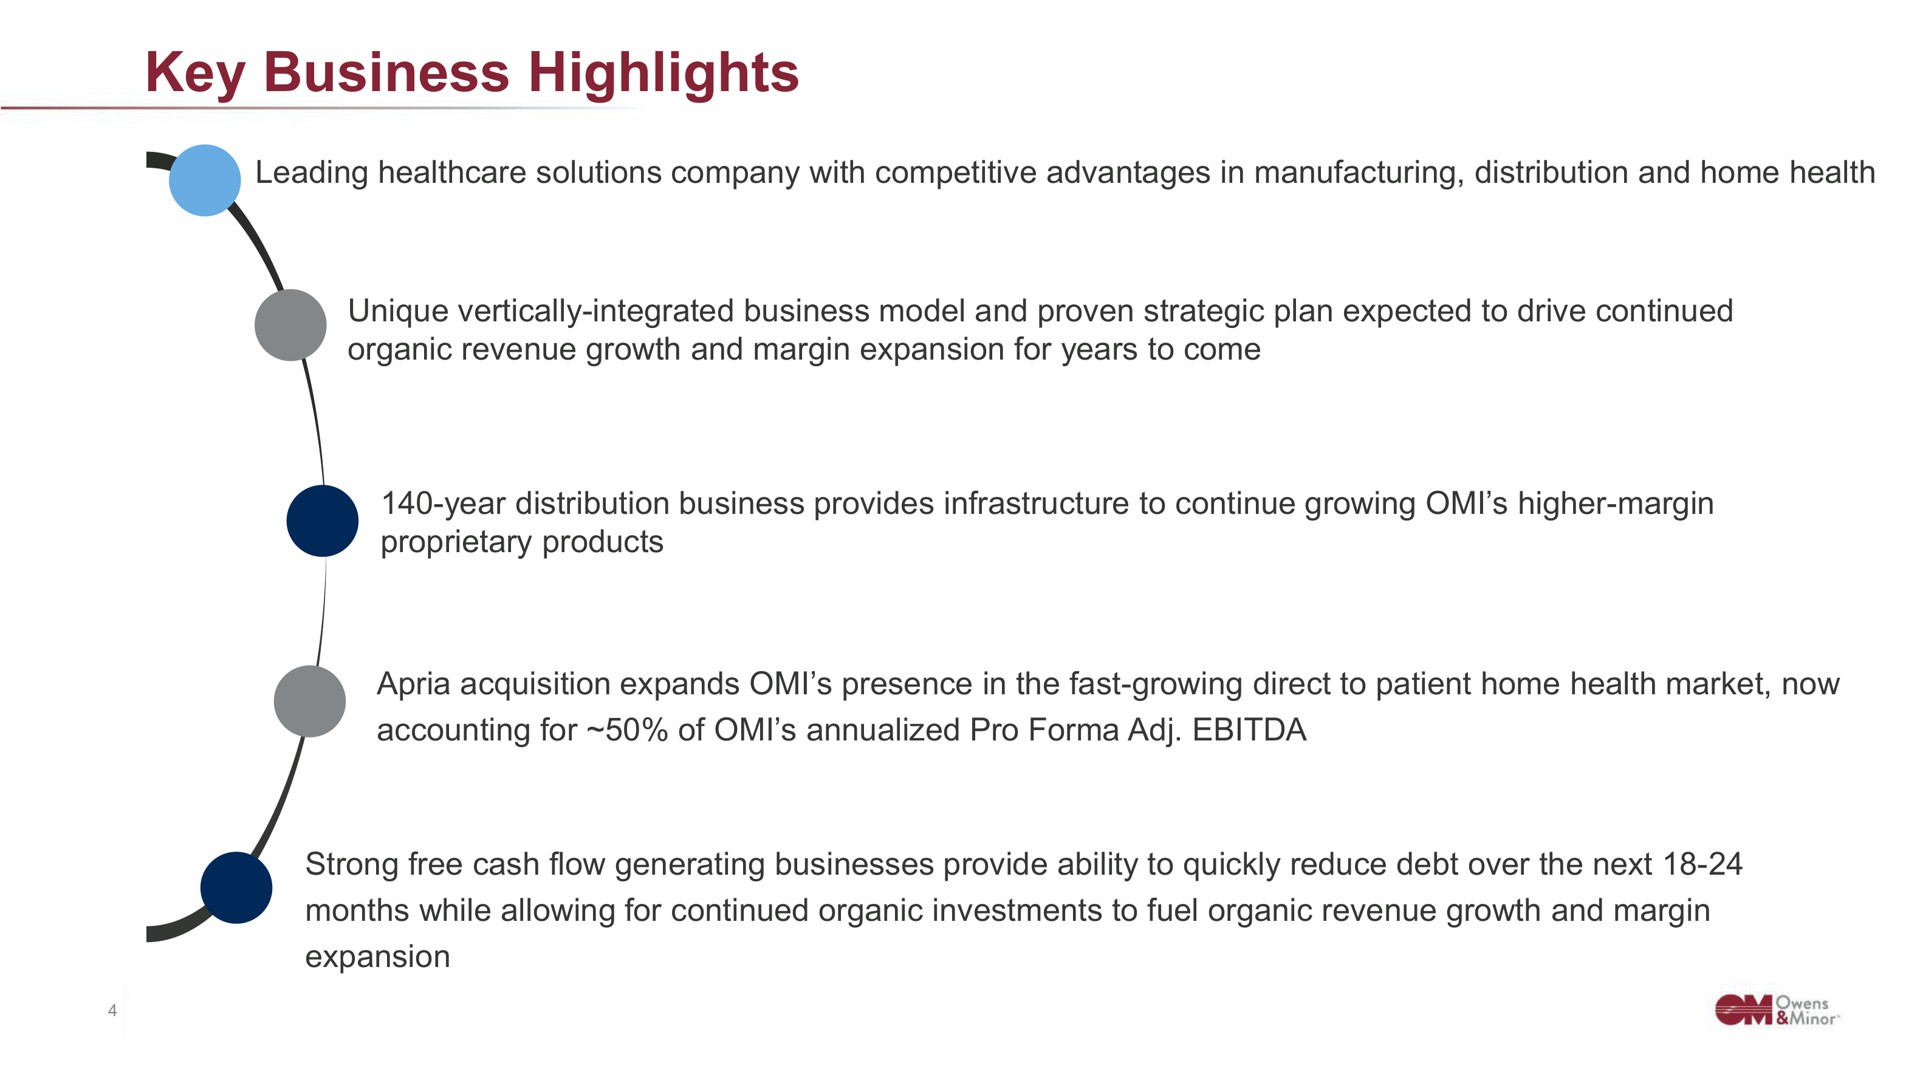 key business highlights | Owens&Minor